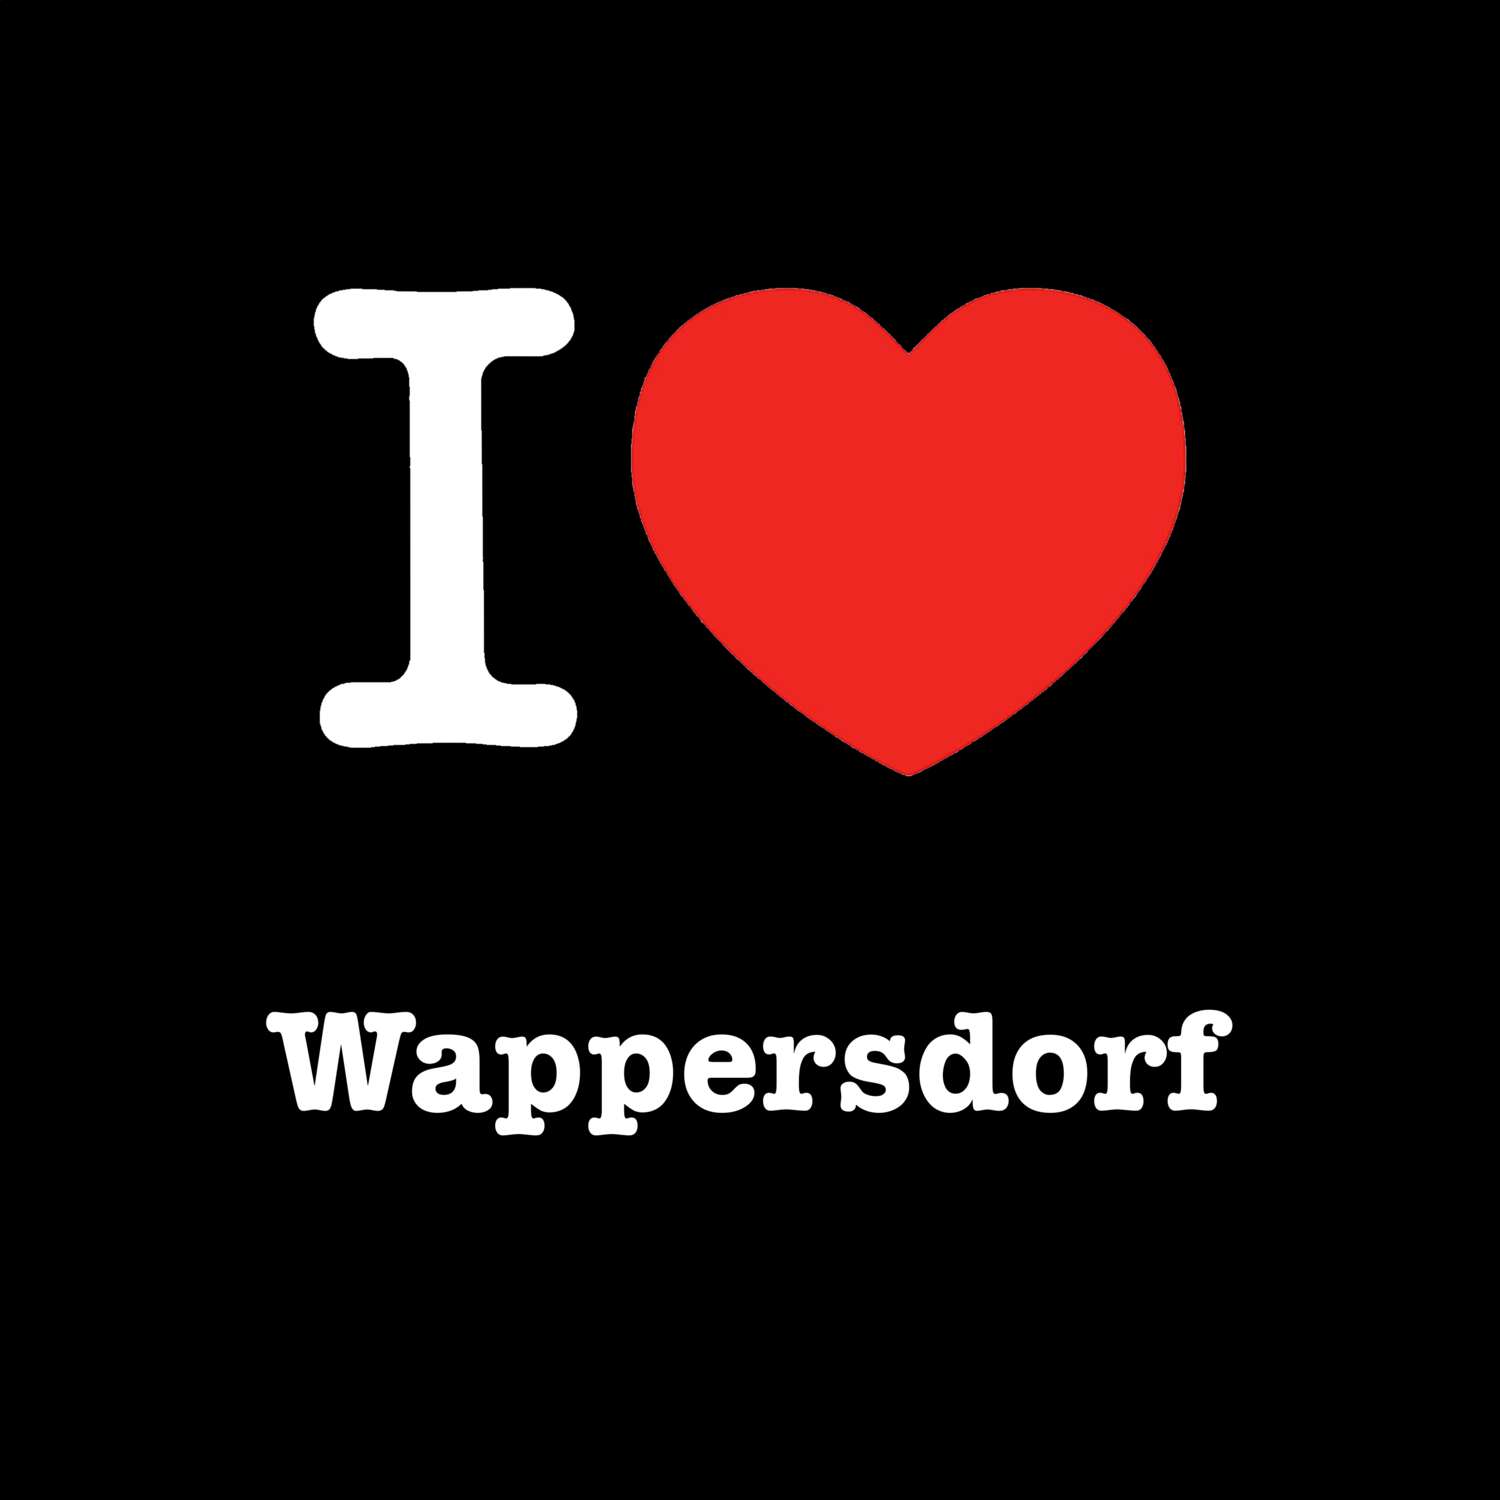 Wappersdorf T-Shirt »I love«